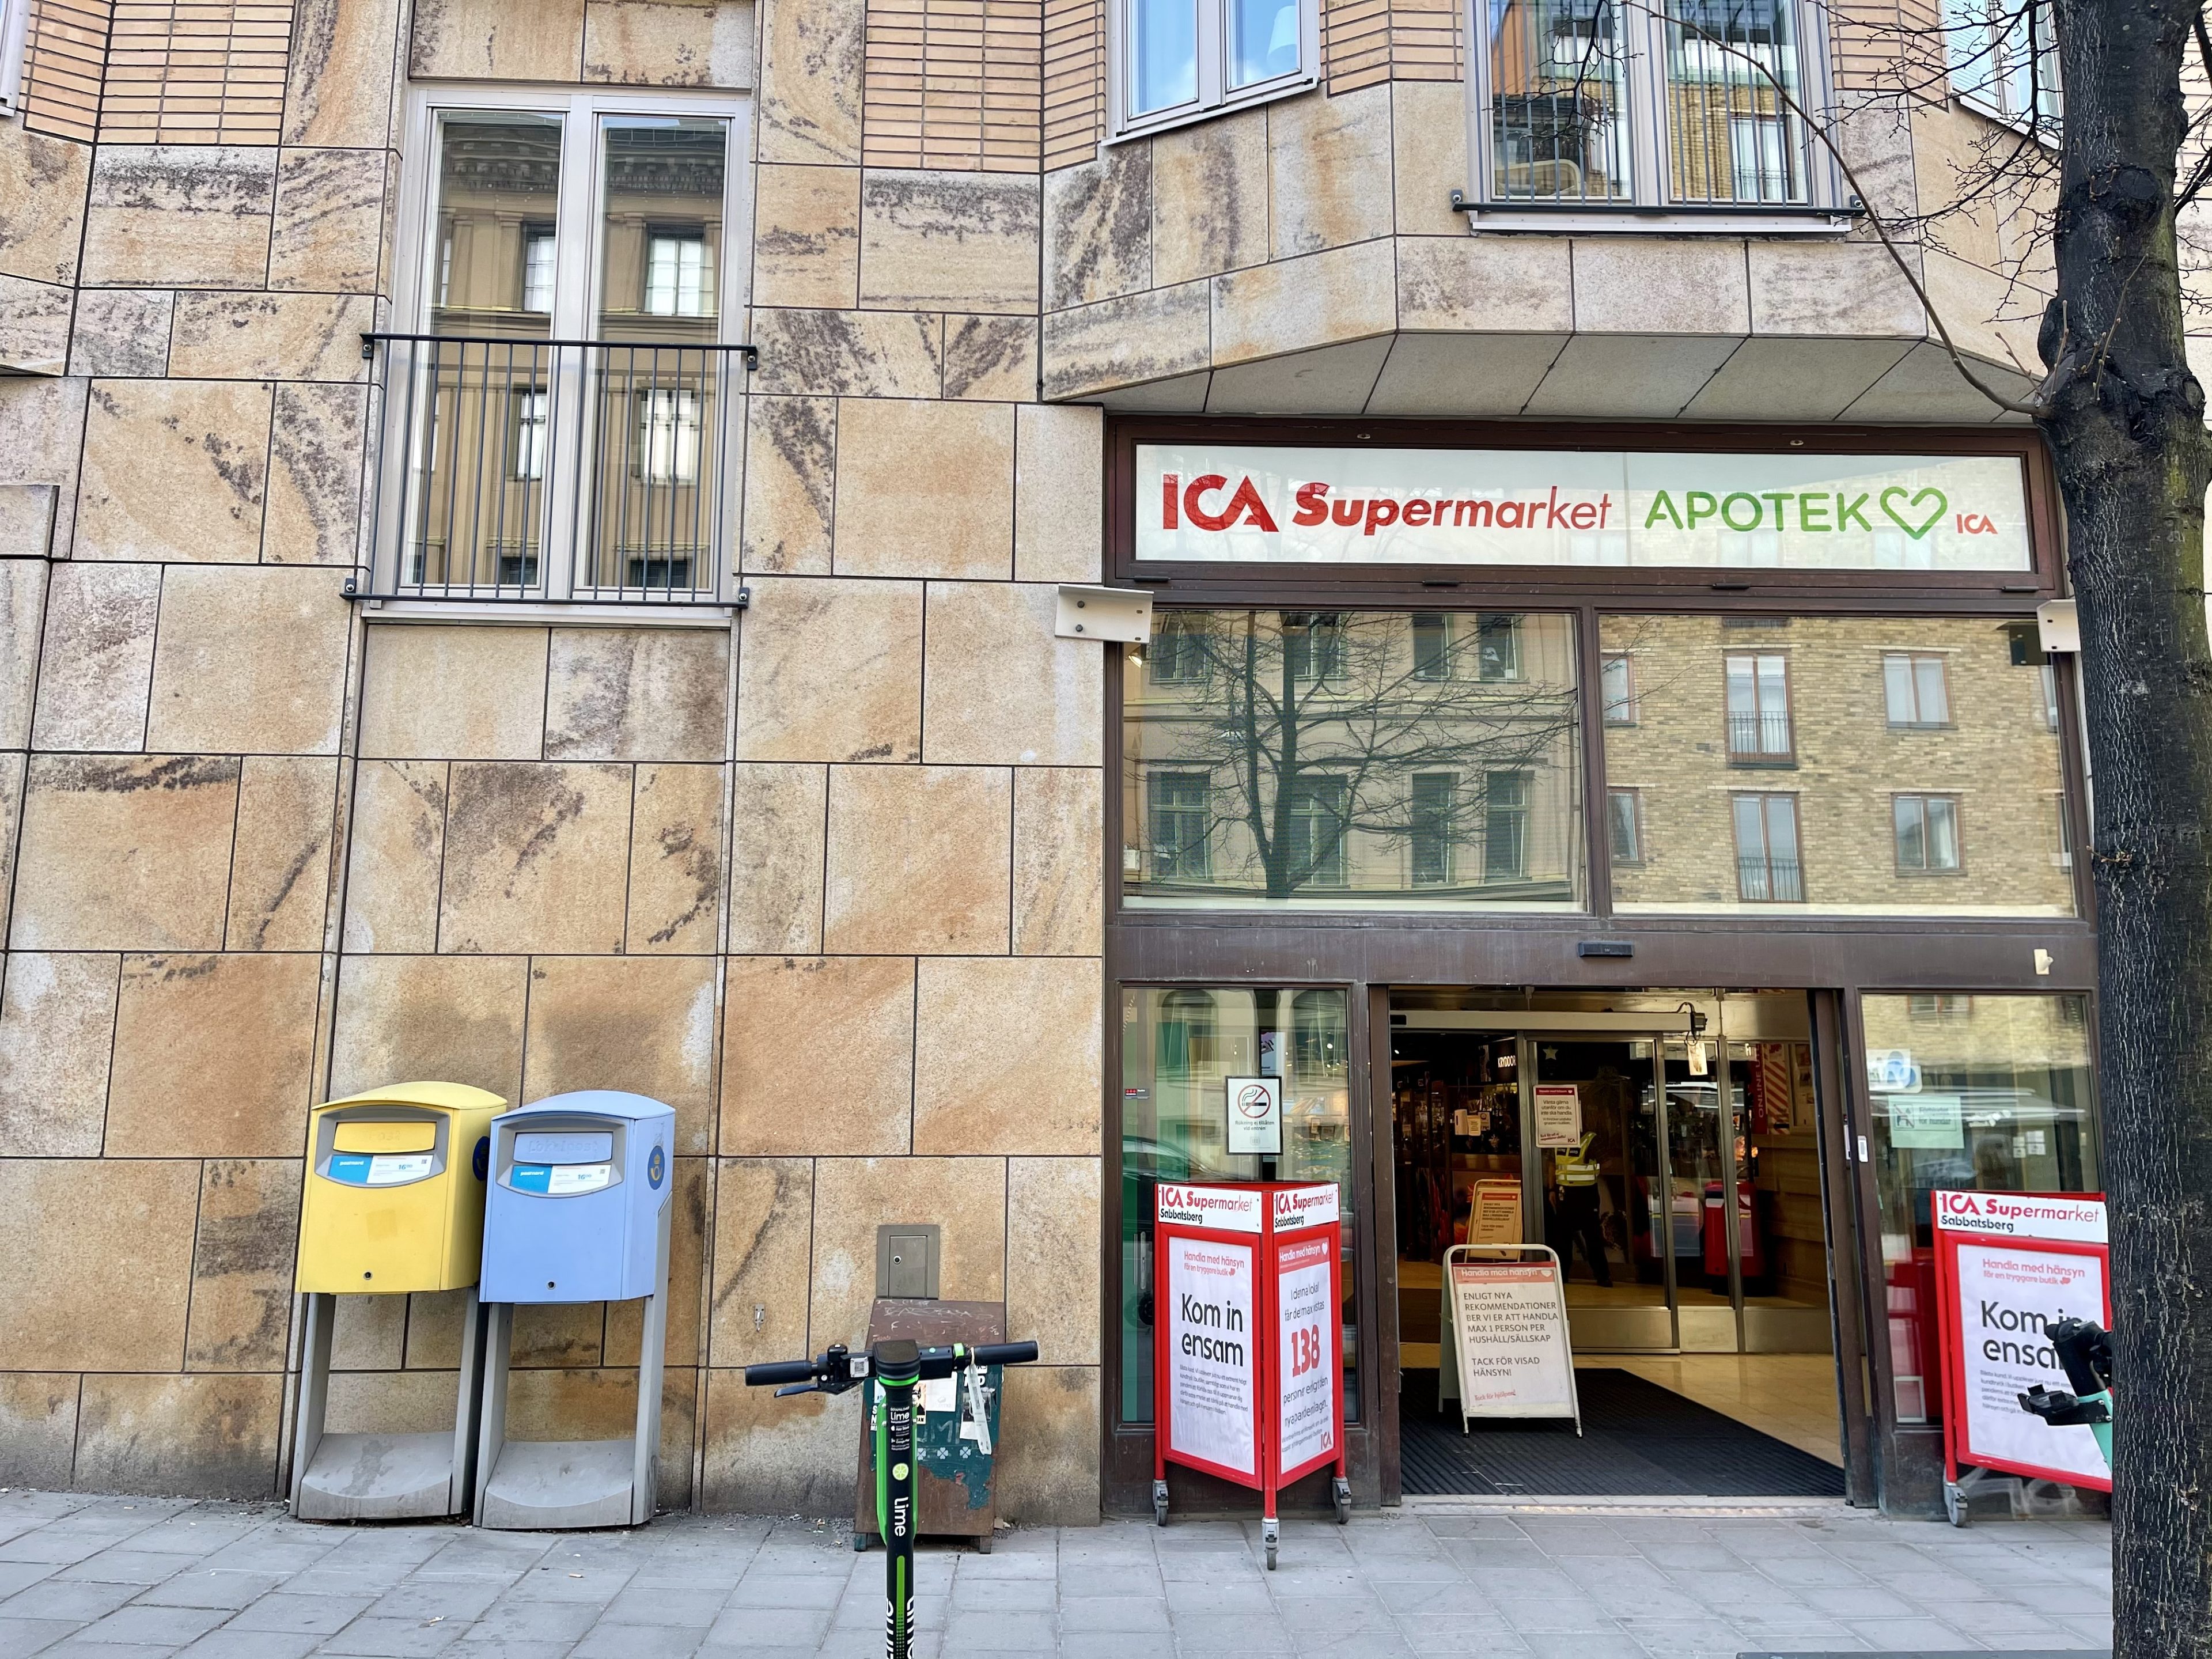 ICA Supermarket Sabbatsberg